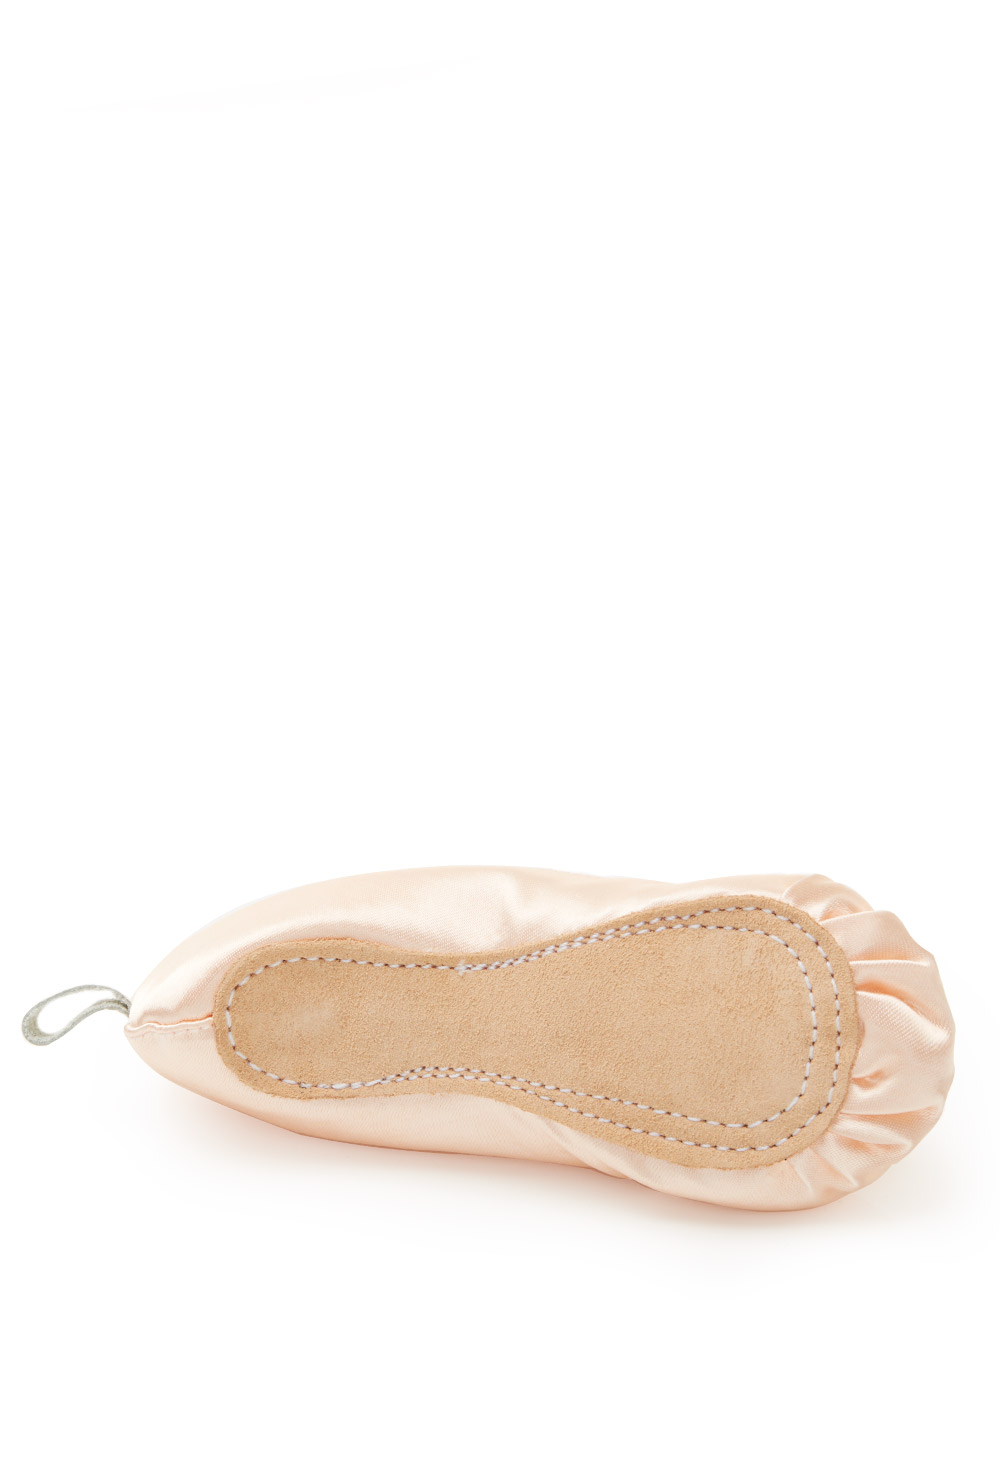 Ballet Shoe Beauty Bag - Porselli Dancewear